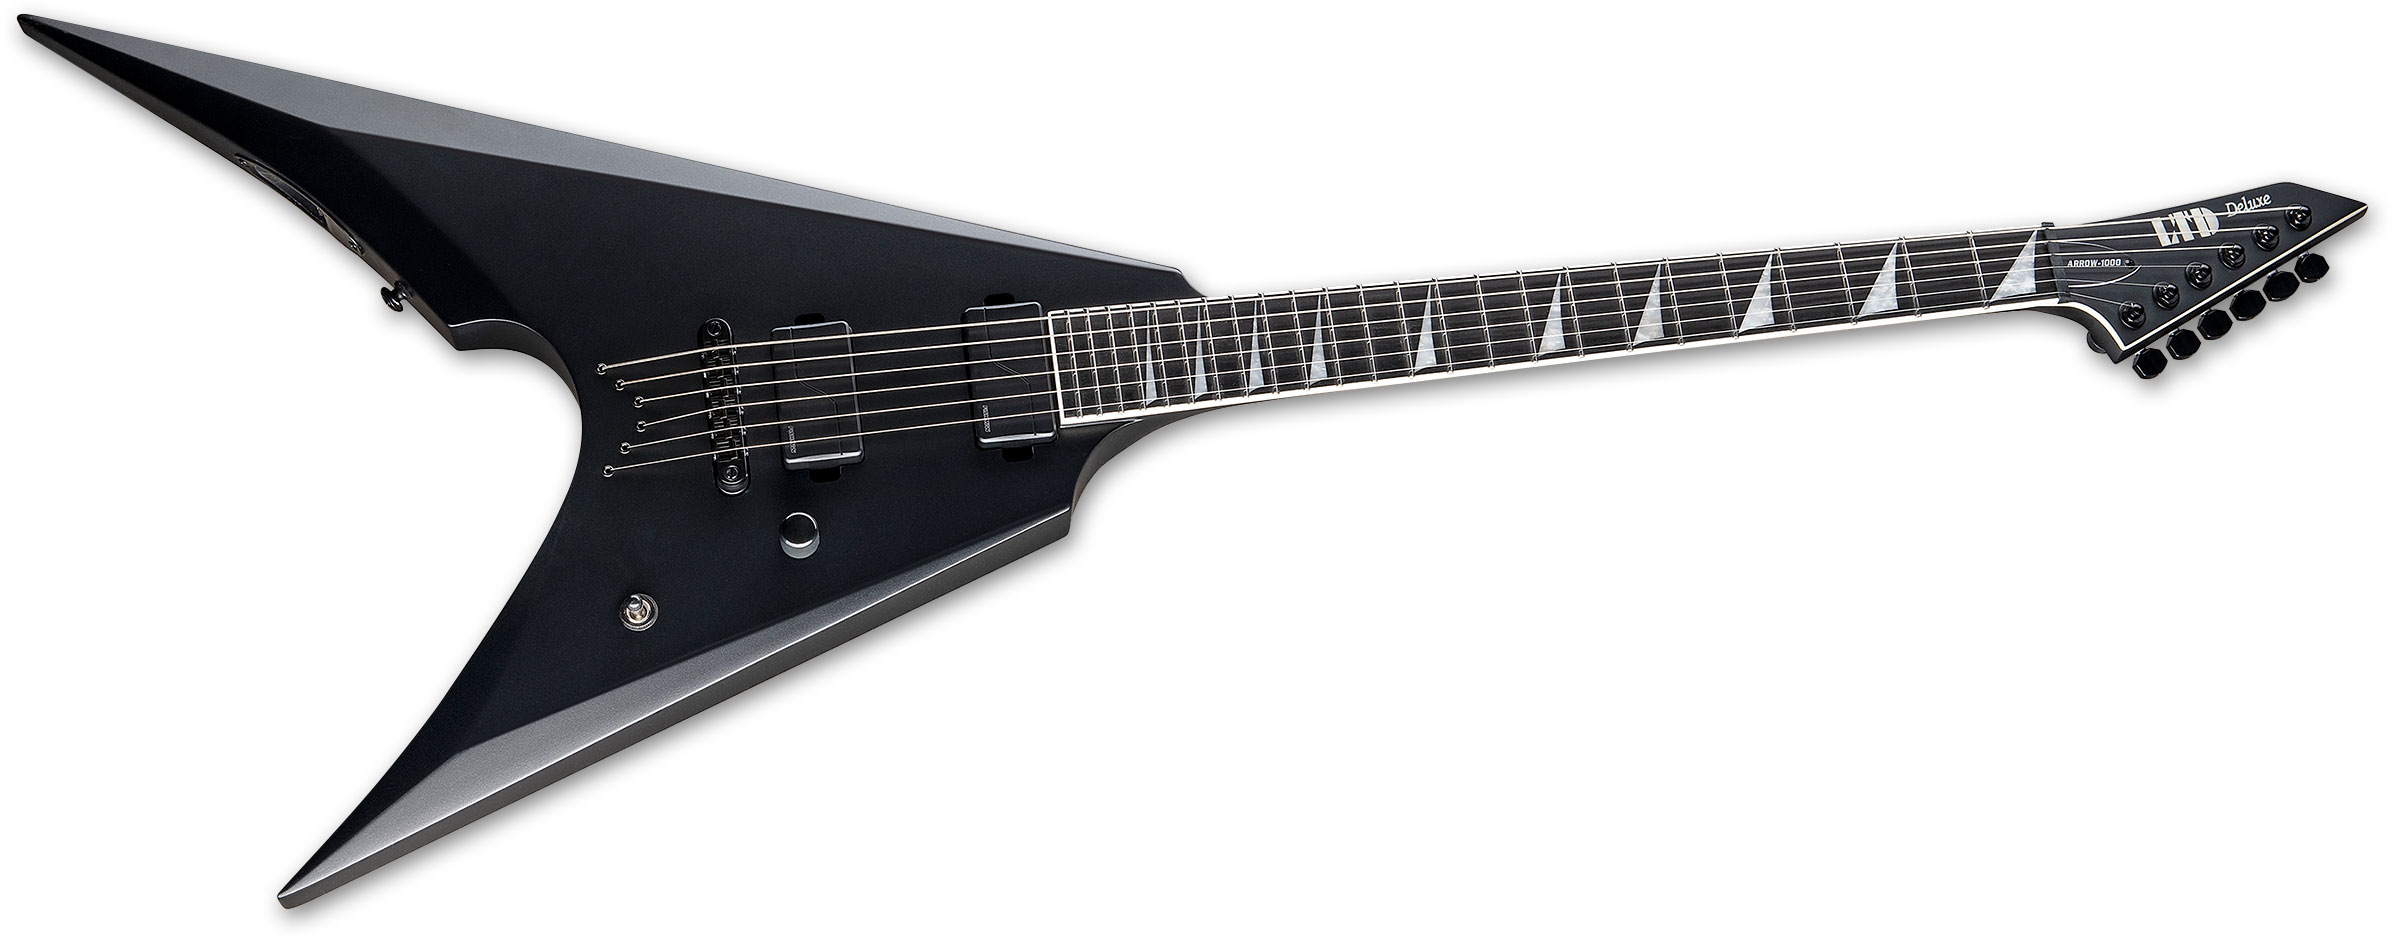 Ltd Arrow-1000nt Hh Fishman Fluence Modern Ht Eb - Charcoal Metallic Satin - Metal electric guitar - Variation 1